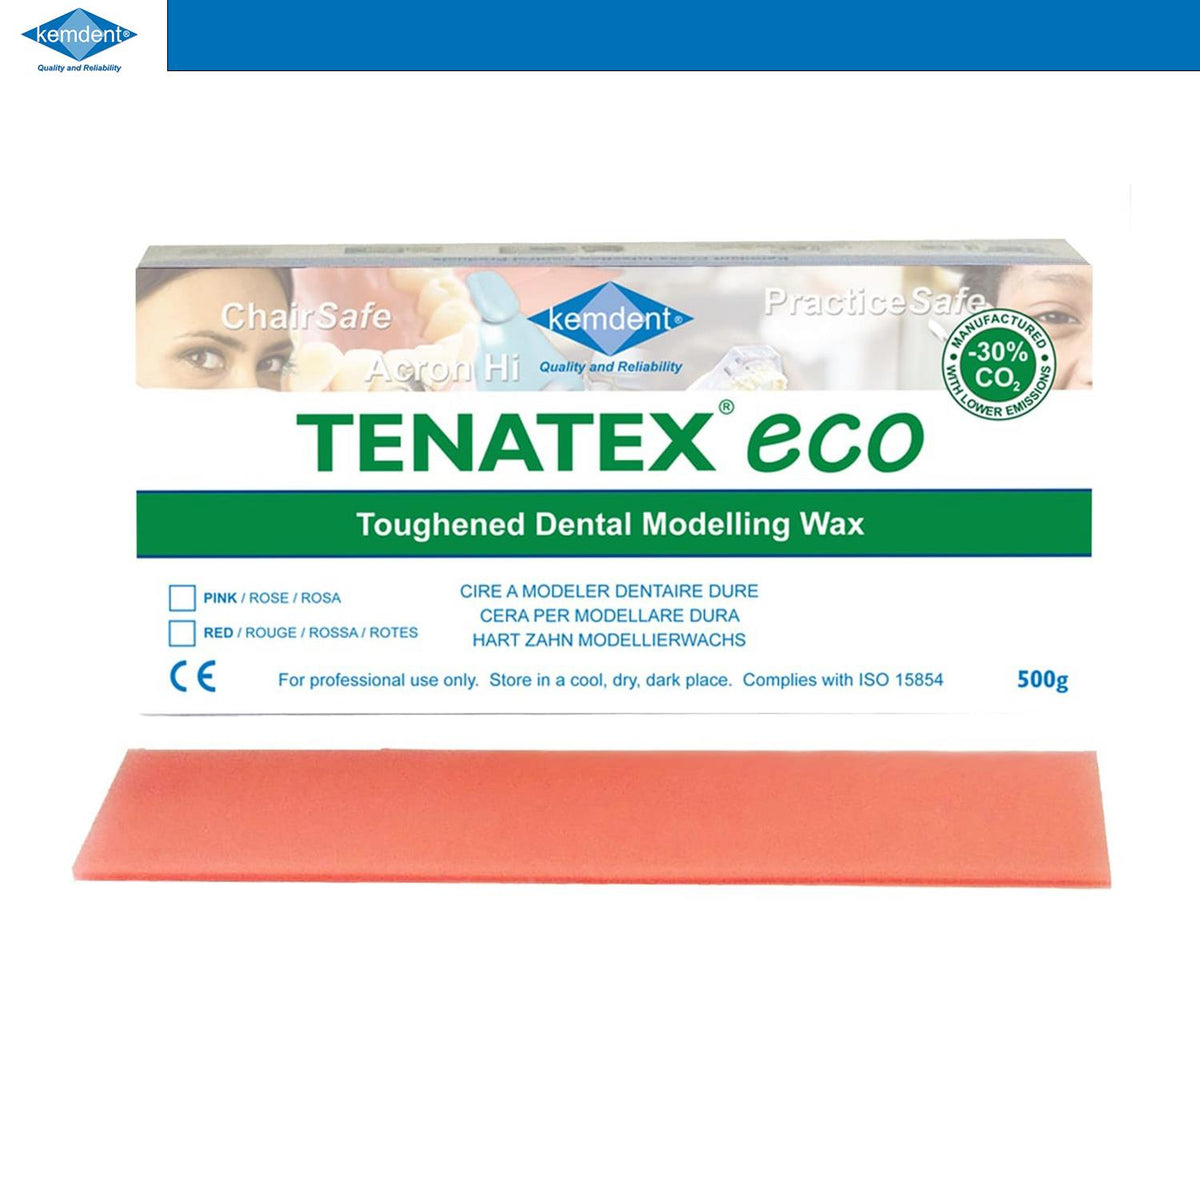 DentrealStore - Kemdent Tenatex Eco Modelling Wax - 1 Box